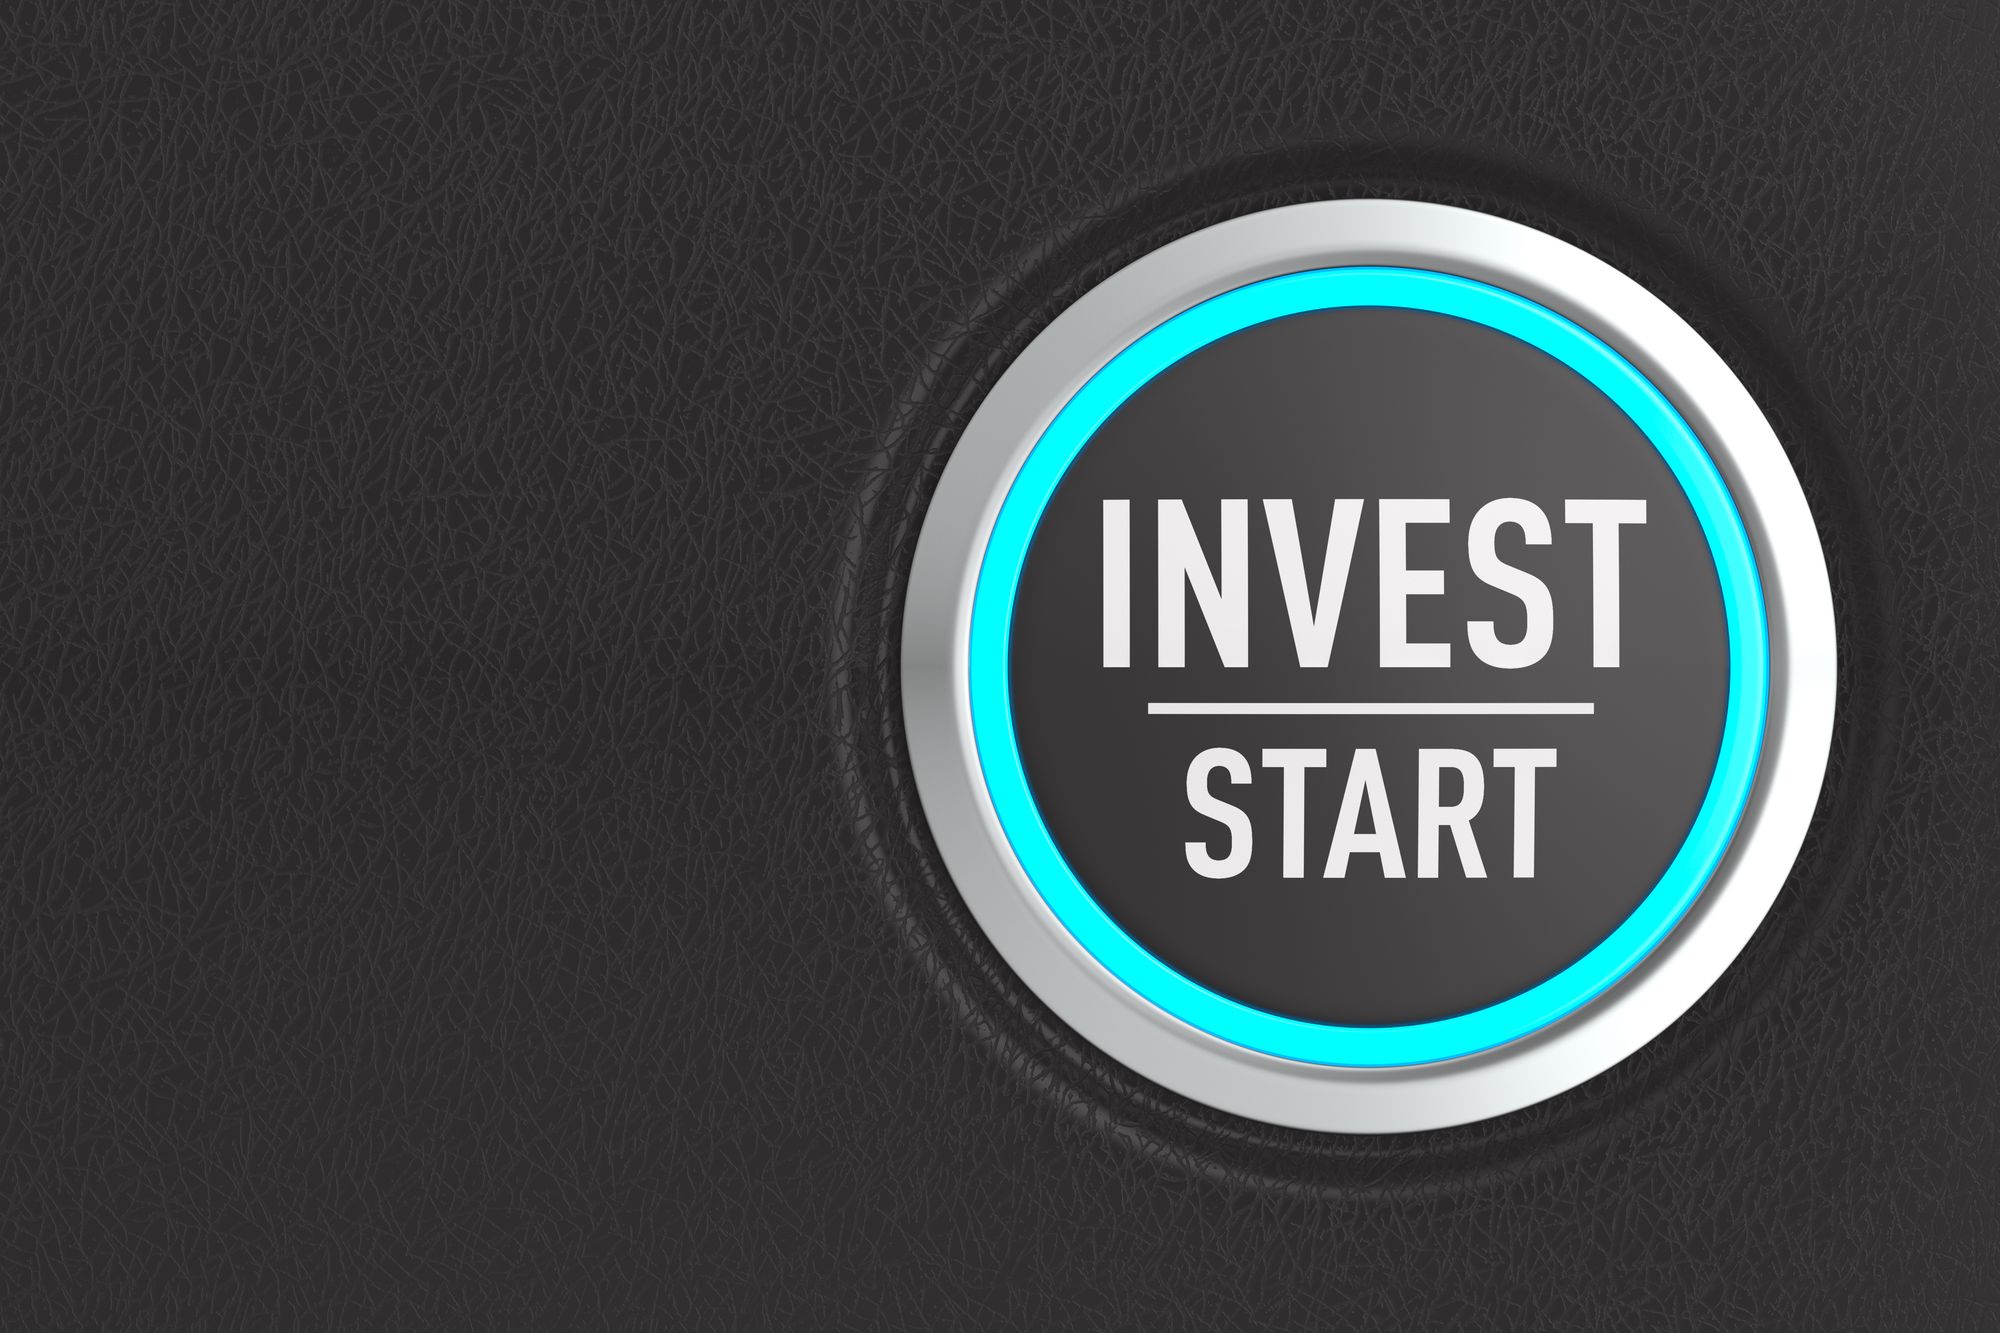 push-button-with-text-invest-start-dark-background-3d-illustration